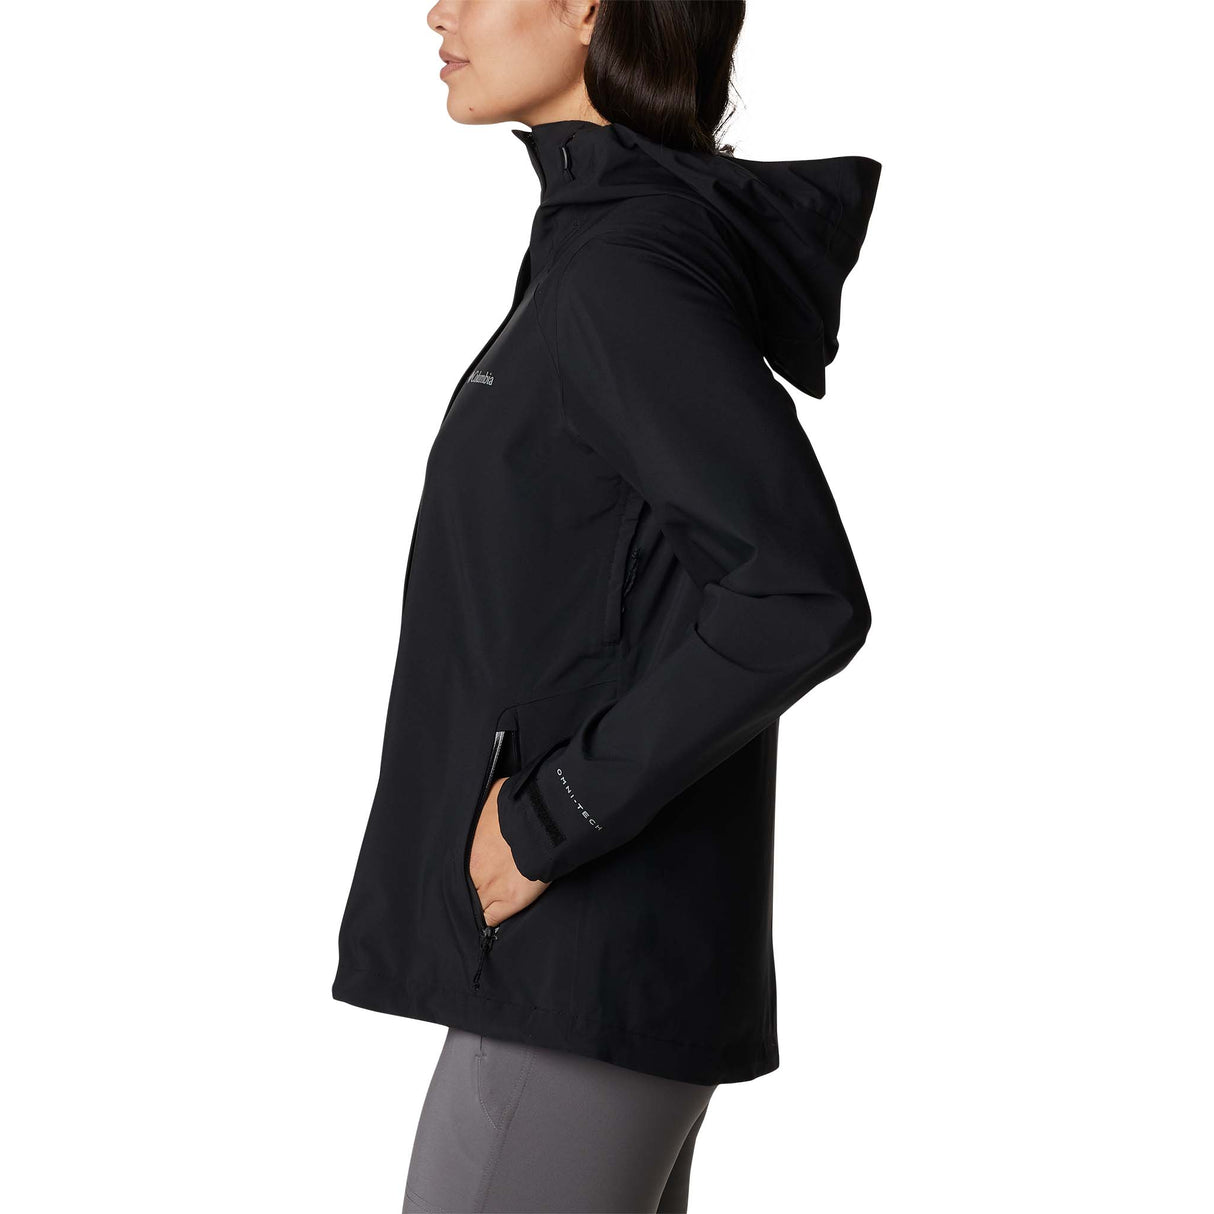 Columbia Earth Explorer Shell rain jacket for women